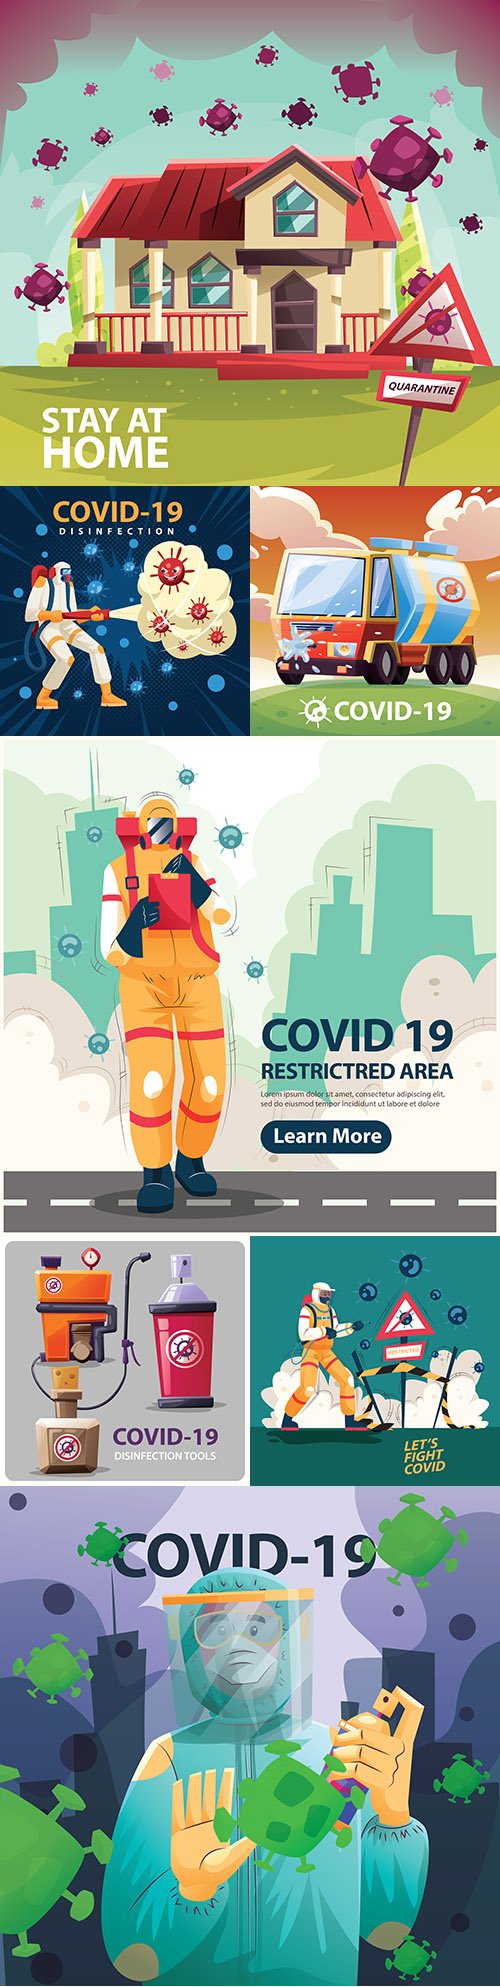 Preventing spread coronivirus and disinfection city